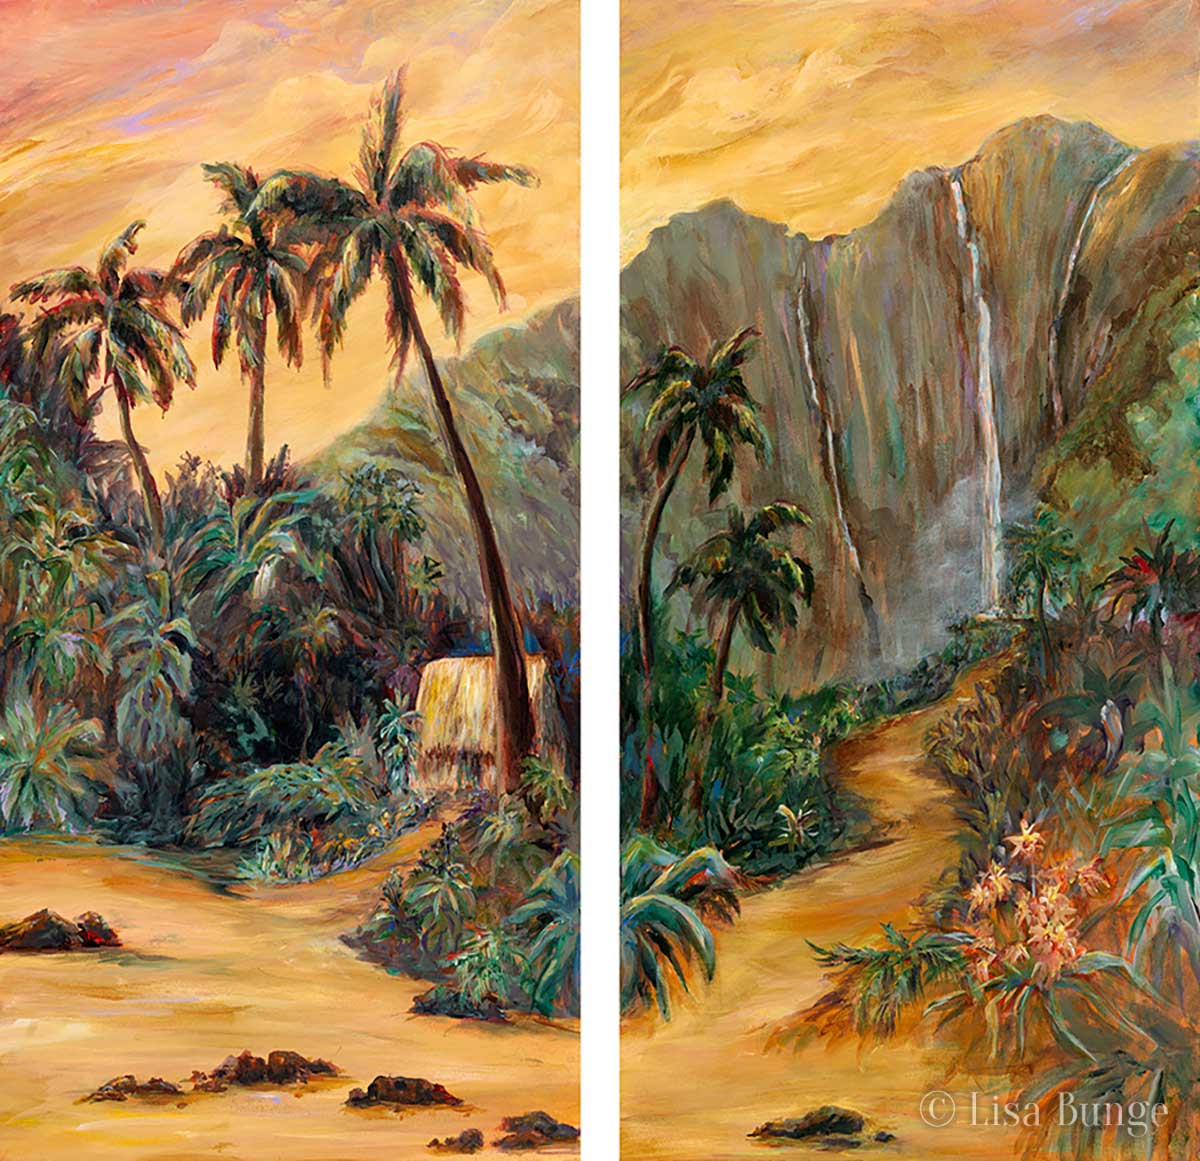 Painting of tropical beach scene in Hawaii